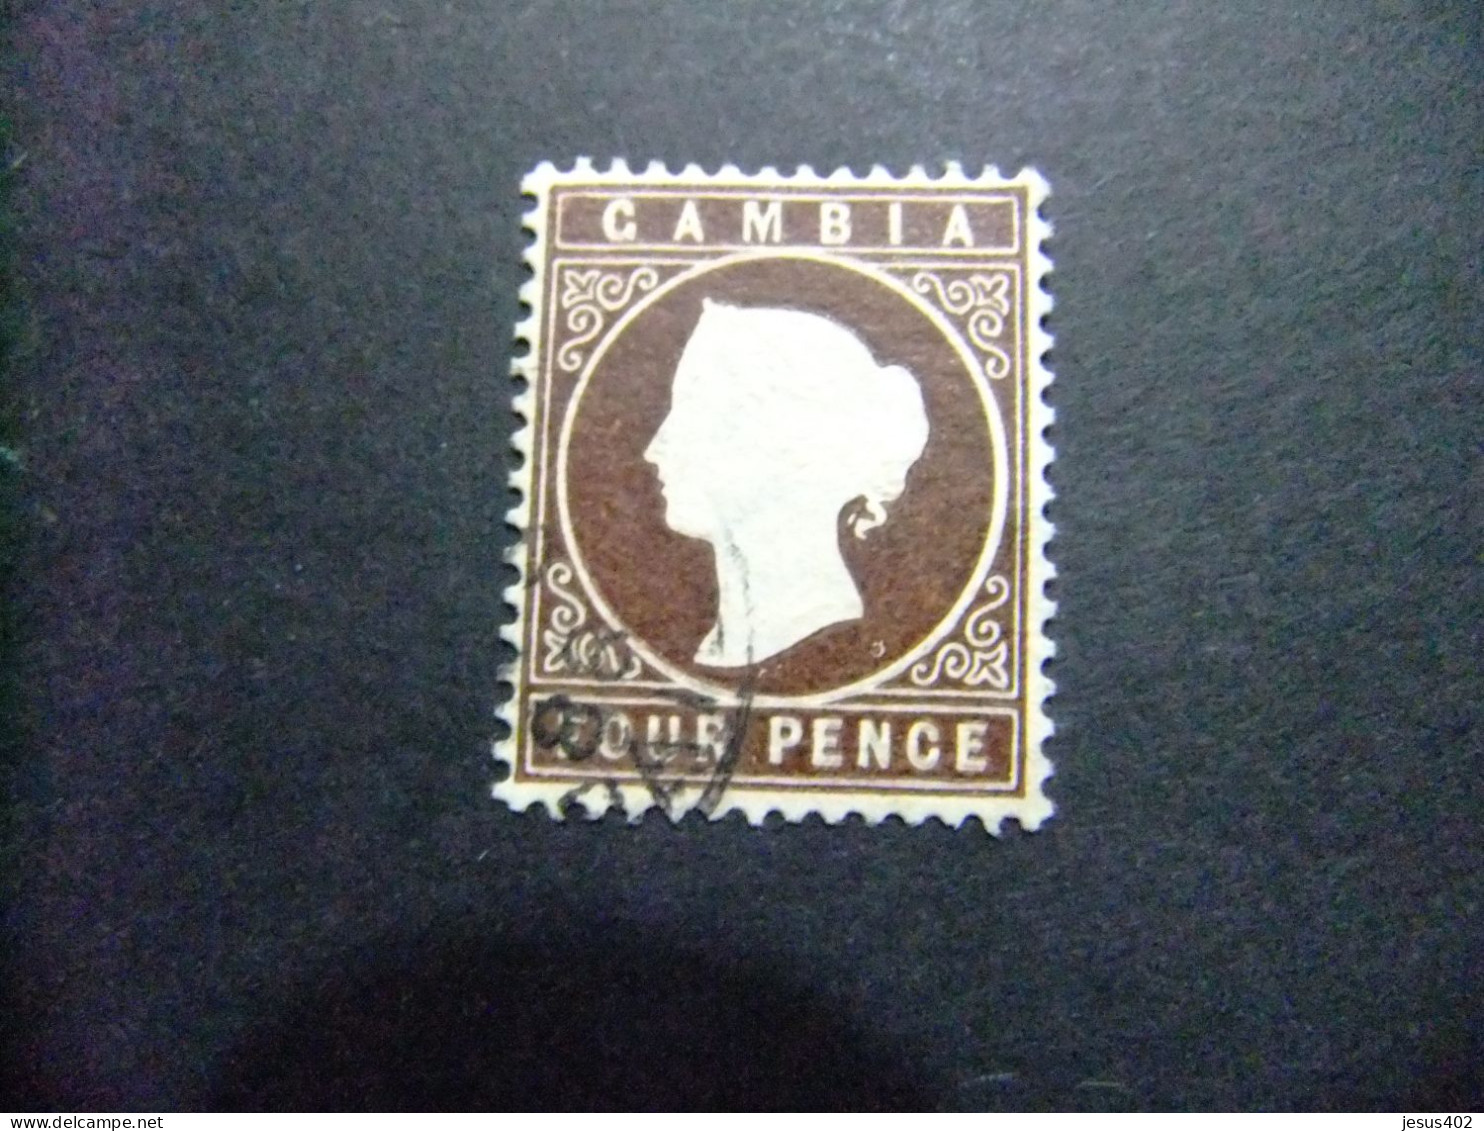 41 GAMBIA GAMBIE 1886 / REINA VICTORIA / Brun / YVERT 17 FU WMK CROWN CA Couché - Gambie (...-1964)